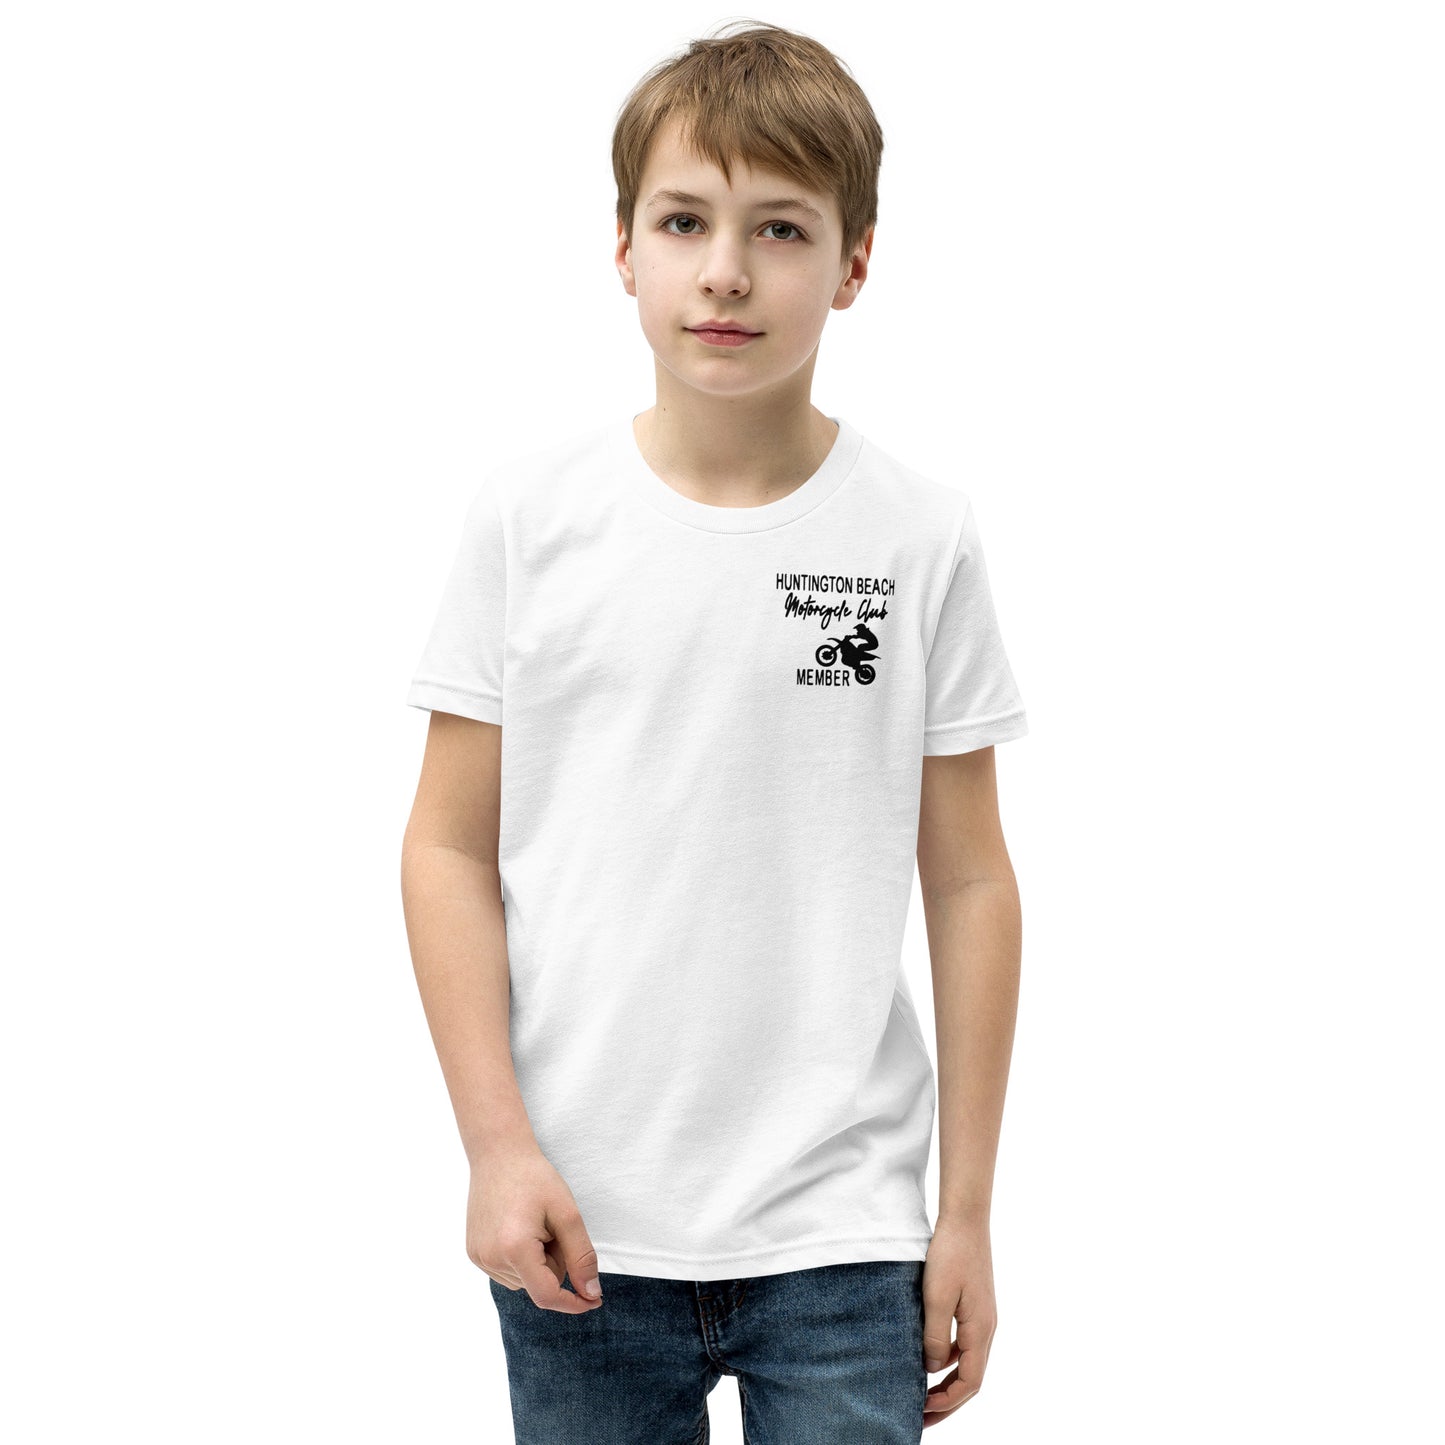 HBMC Members - Youth T-Shirt